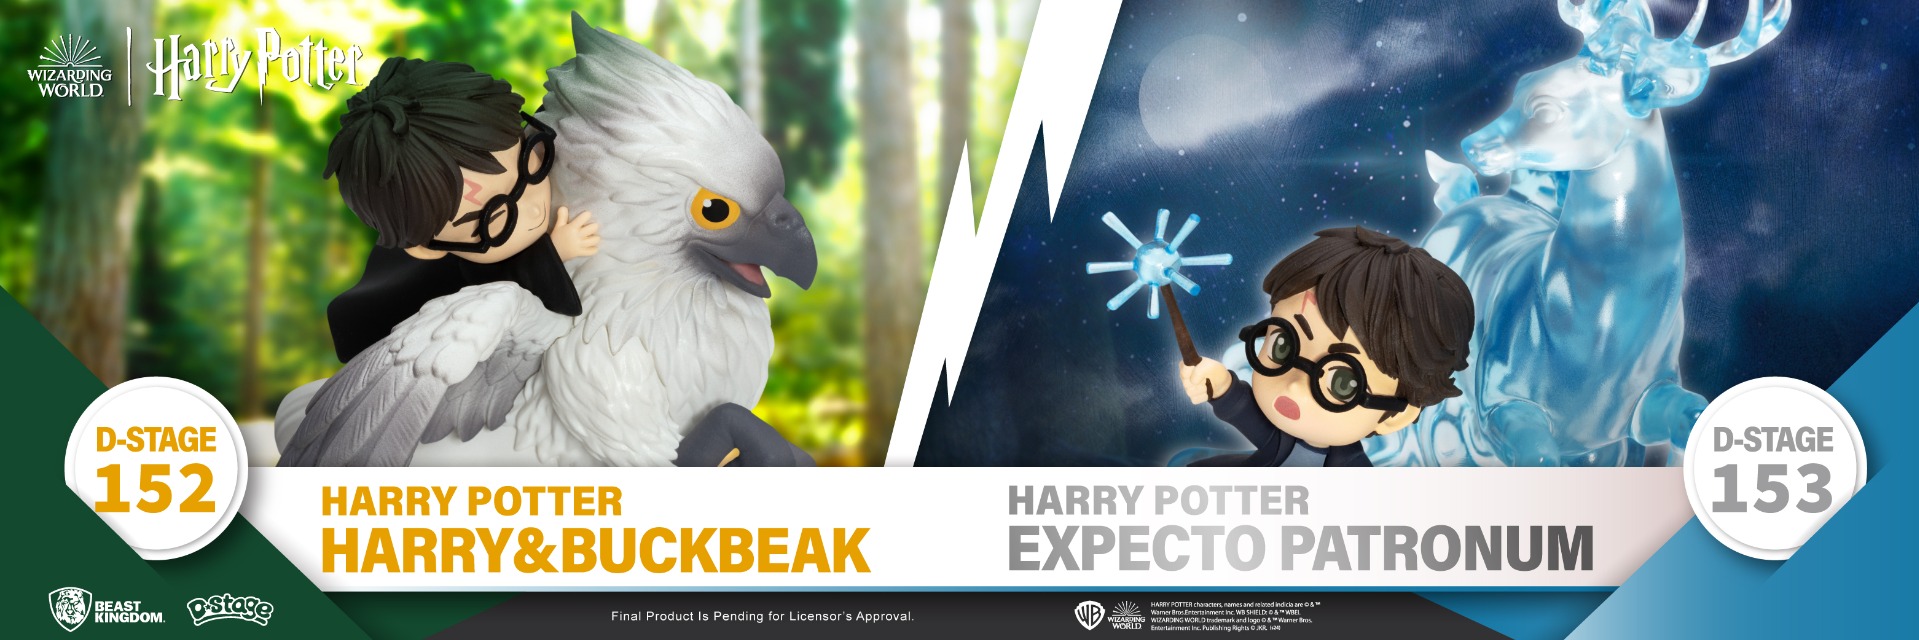 DS-152-Harry Potter-Harry & Buckbeak, DS-153-Harry Potter-Expecto Patronum